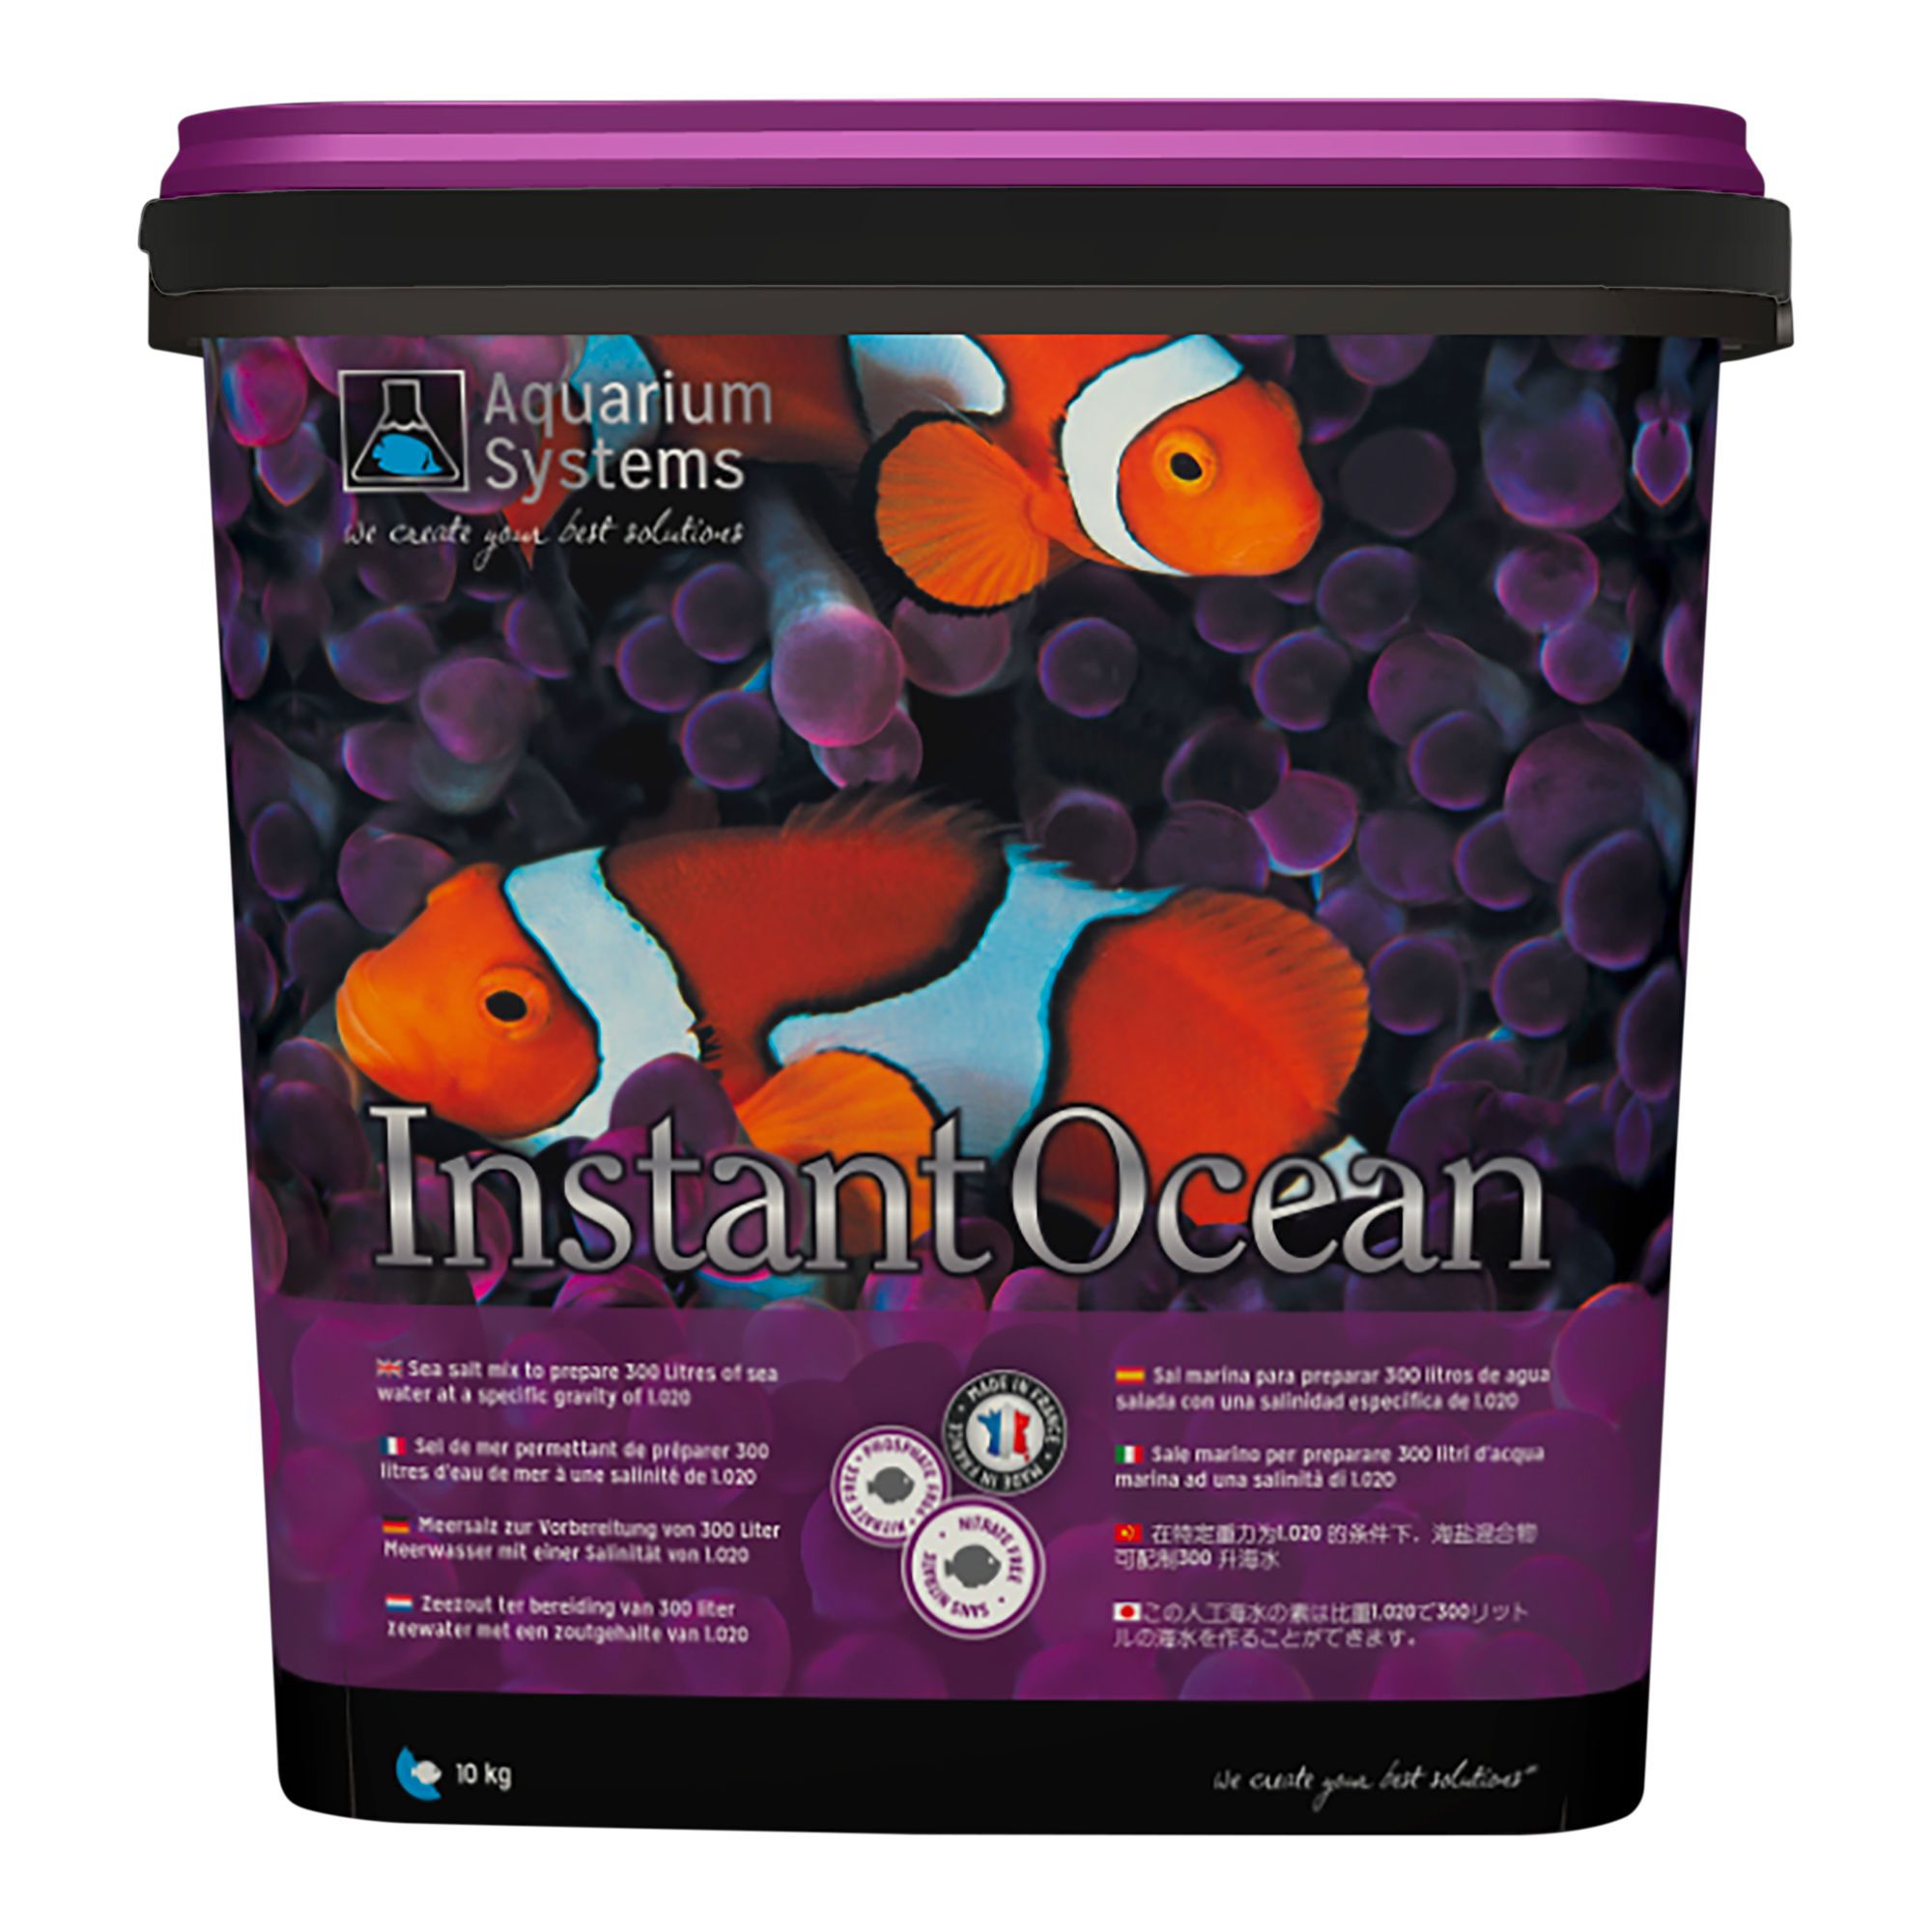 Aquarium Systems - Instant Ocean Meersalz